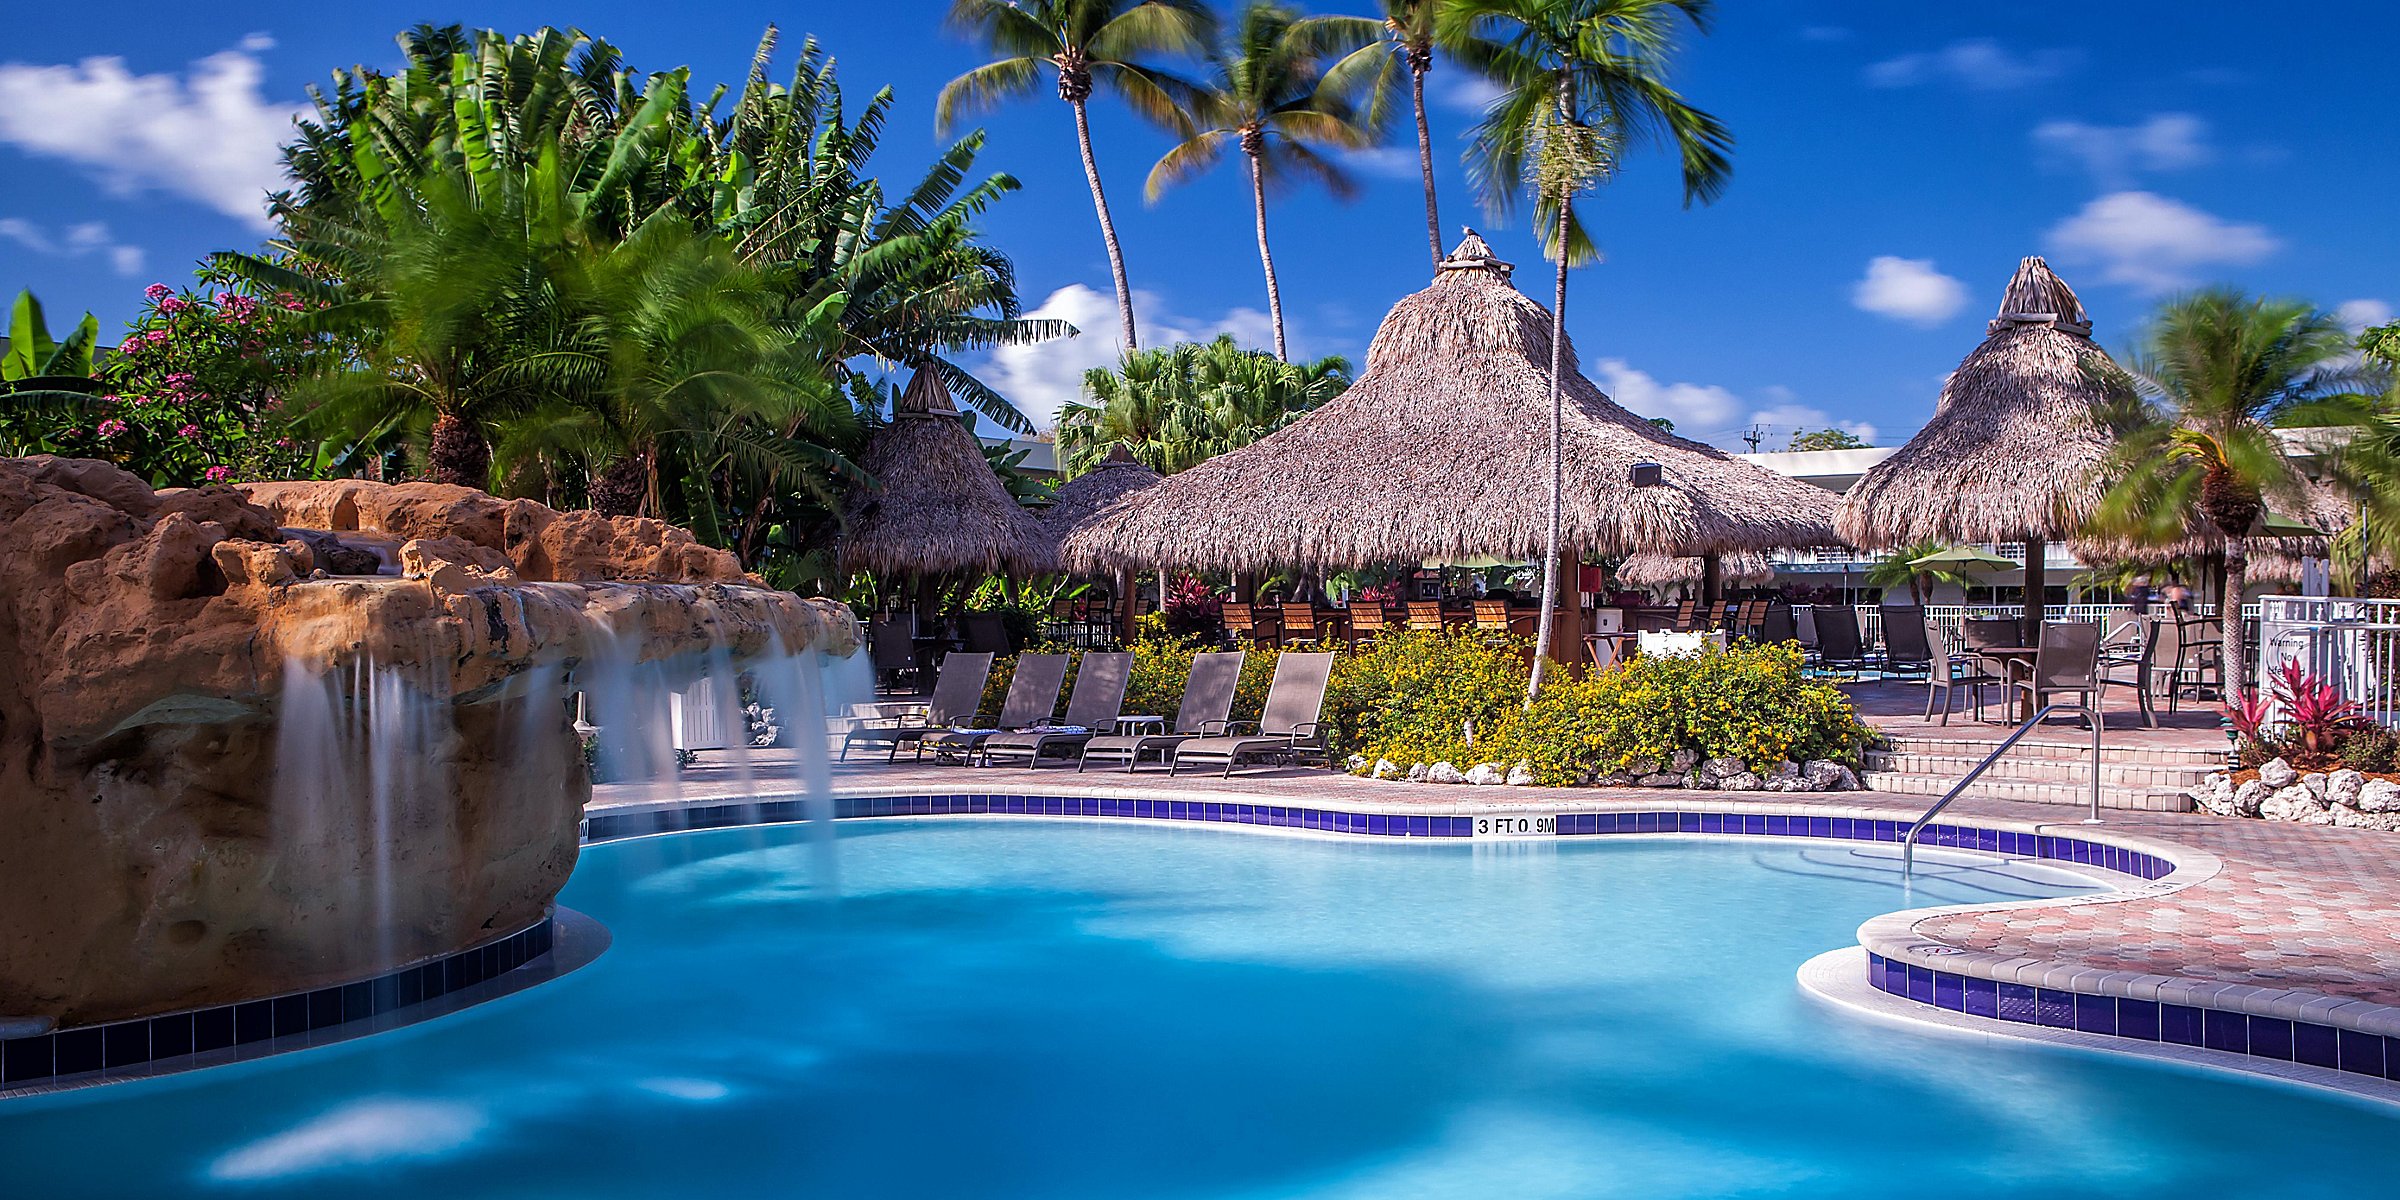 Florida Keys Hotels   Hotels in Key Largo   Holiday Inn